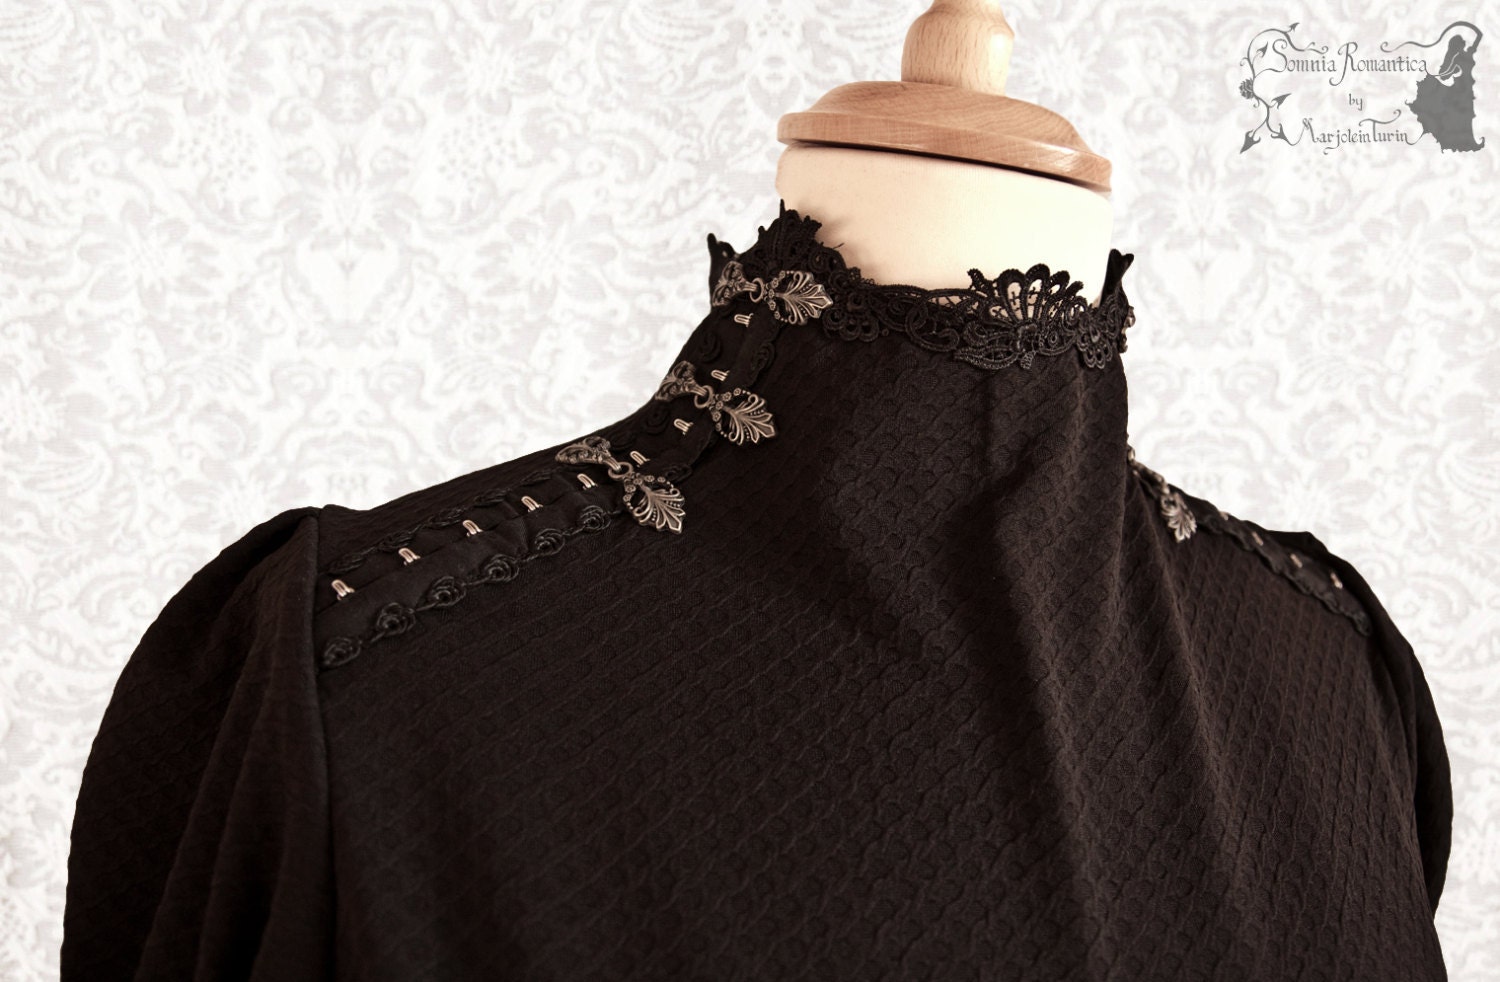 Top black Victorian shirt Steampunk romantic by SomniaRomantica